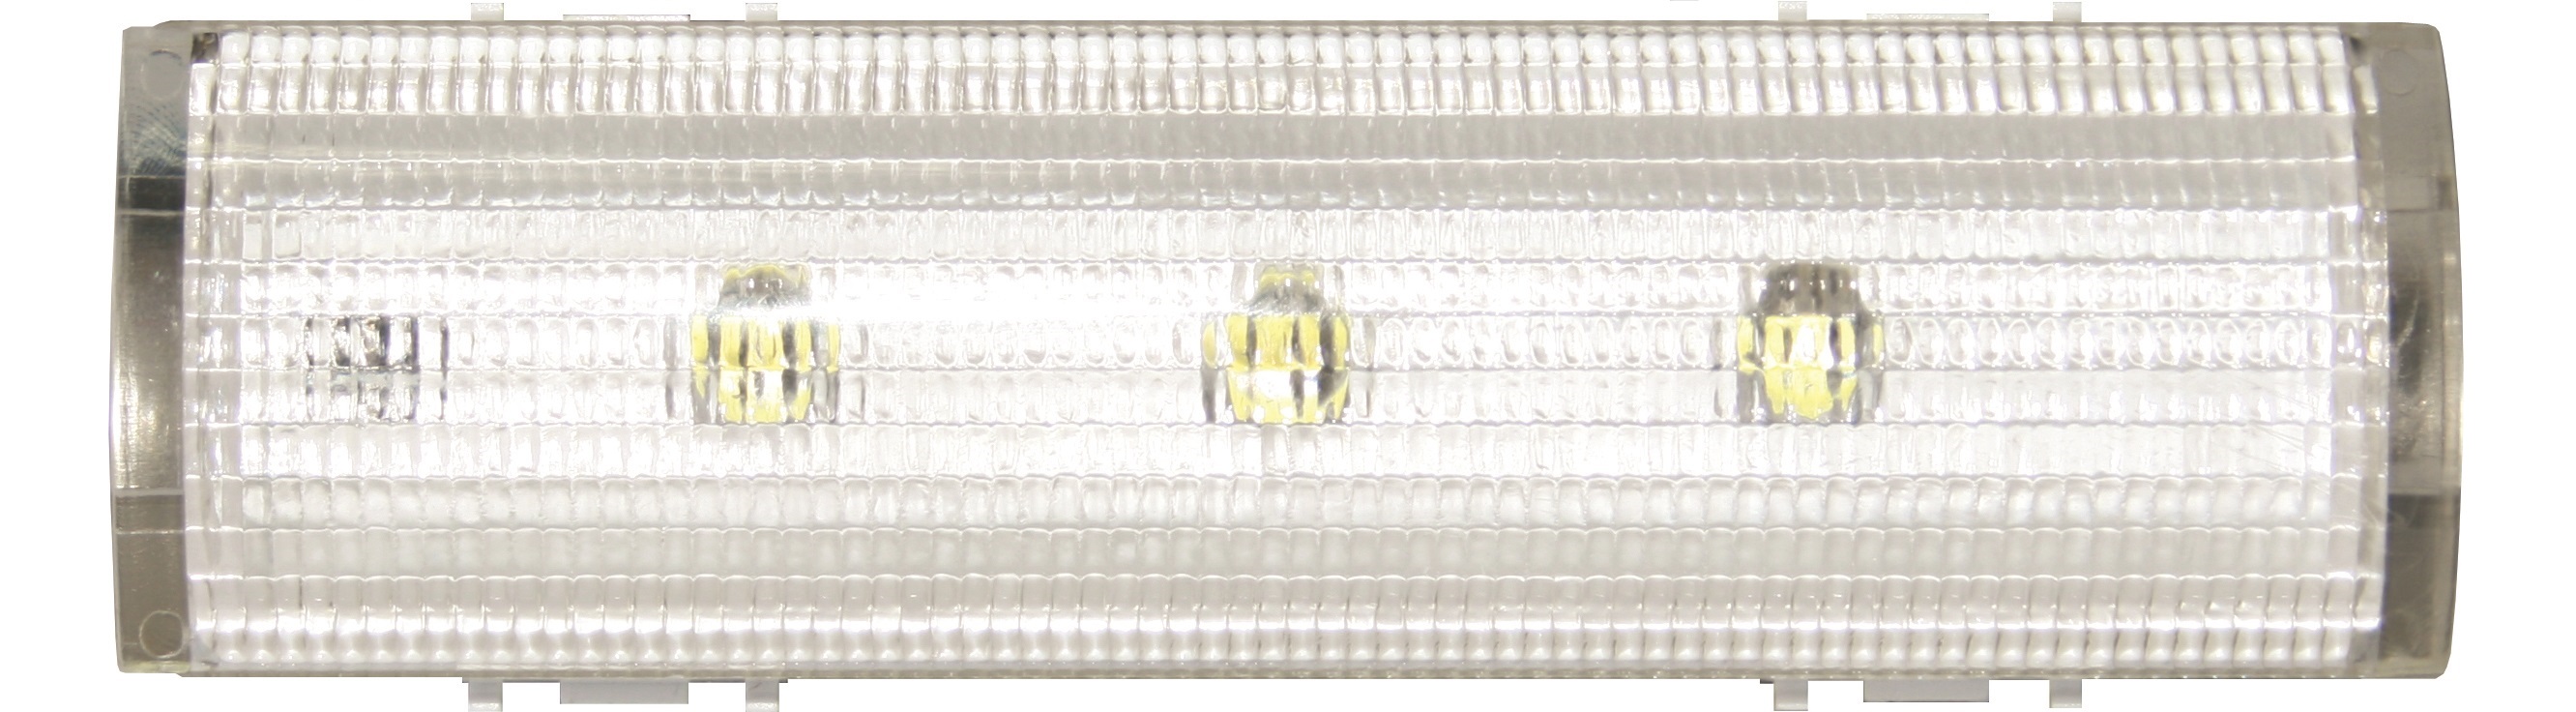 Foto: LED-Akkulicht für UP-Montage, 6h Akku, 250V 1,5W NiMh 6h 7M (c) Schrack